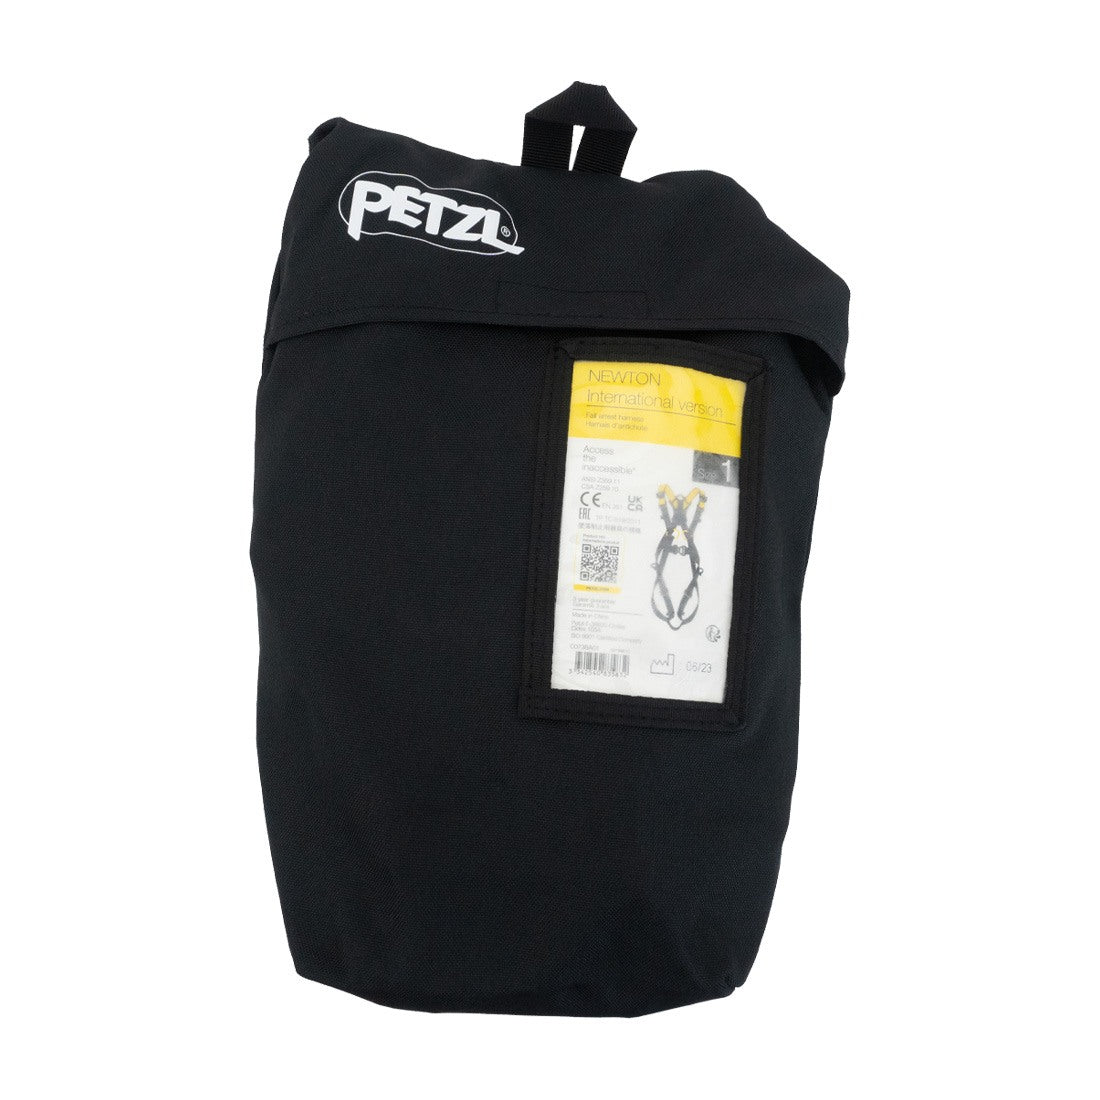 Petzl Newton MEWP Kit Harness Bag View